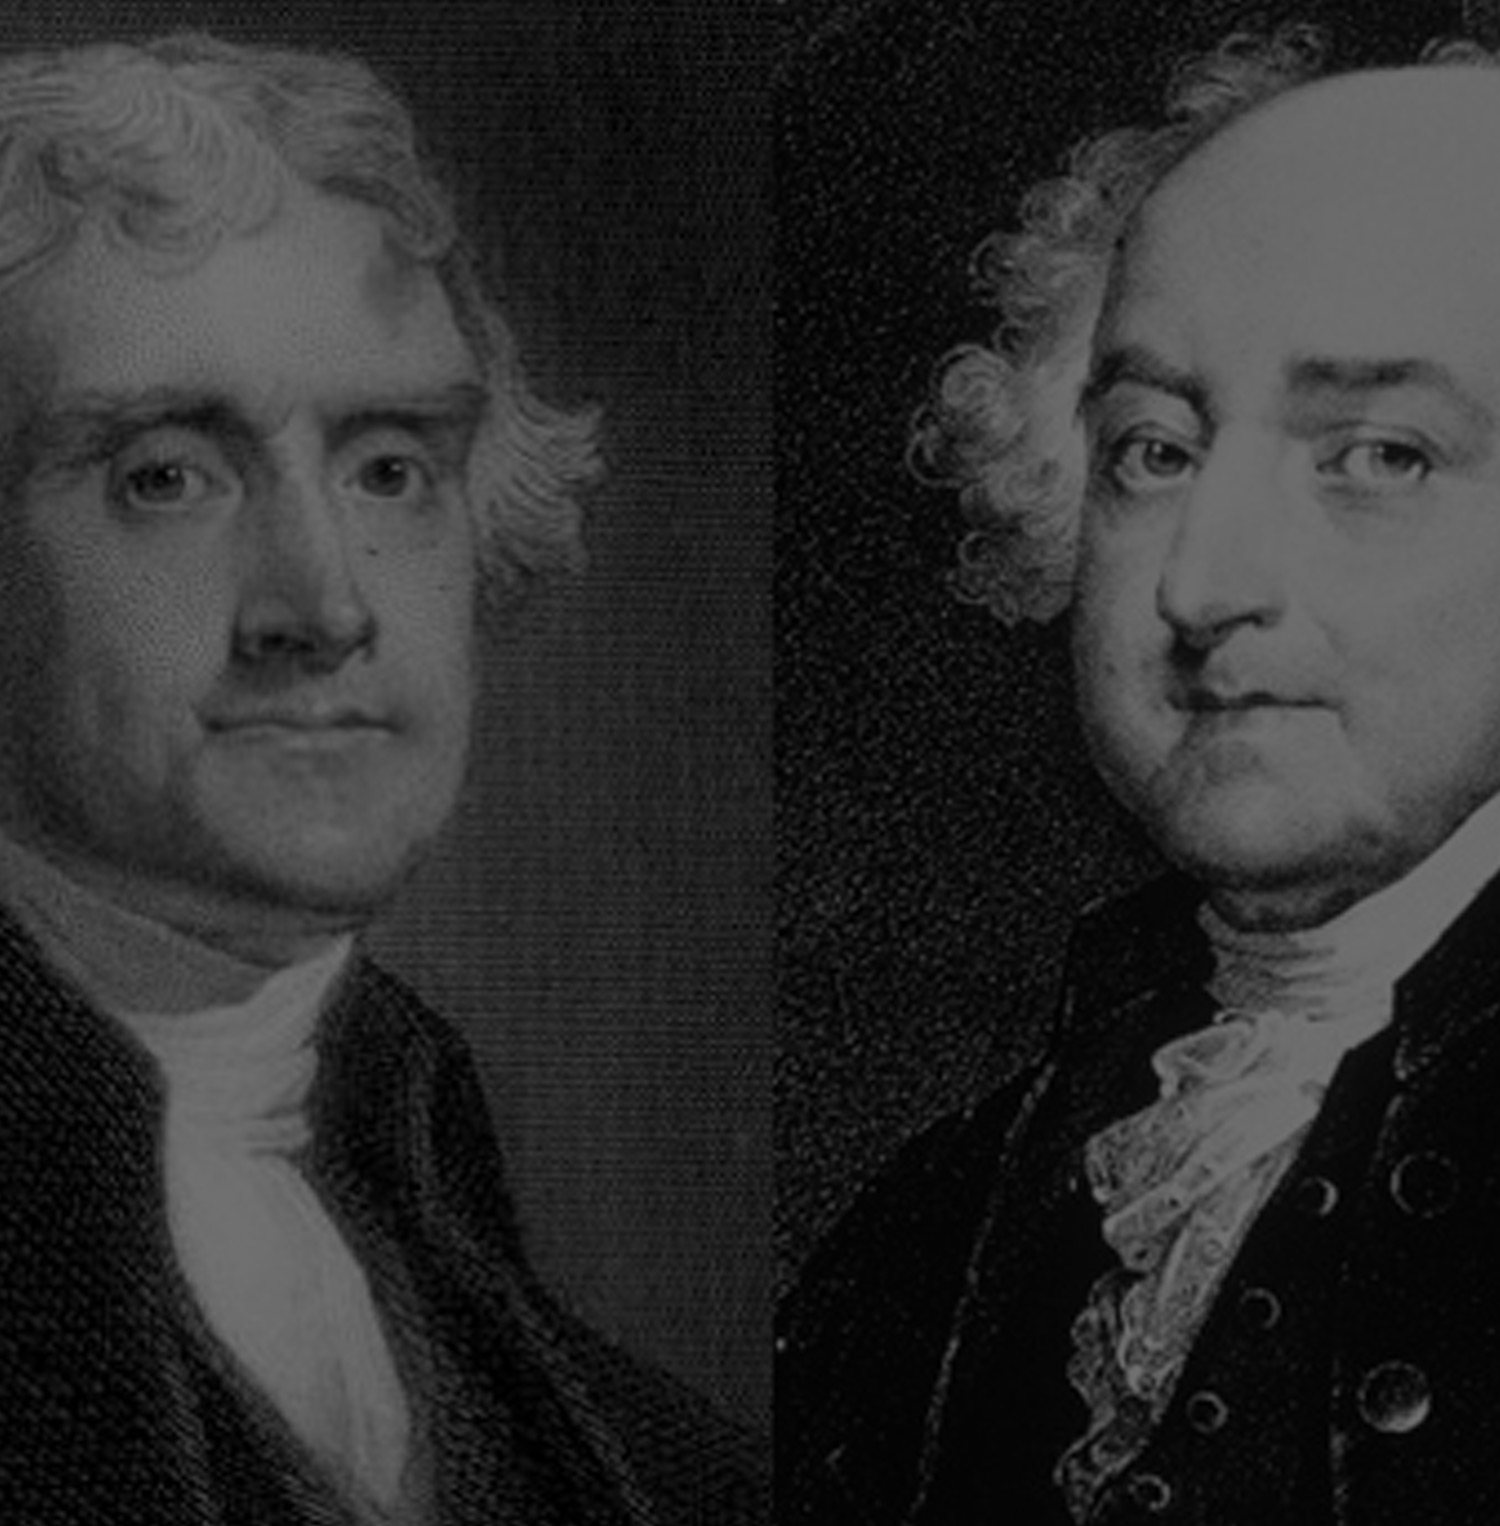 Jefferson and Adams